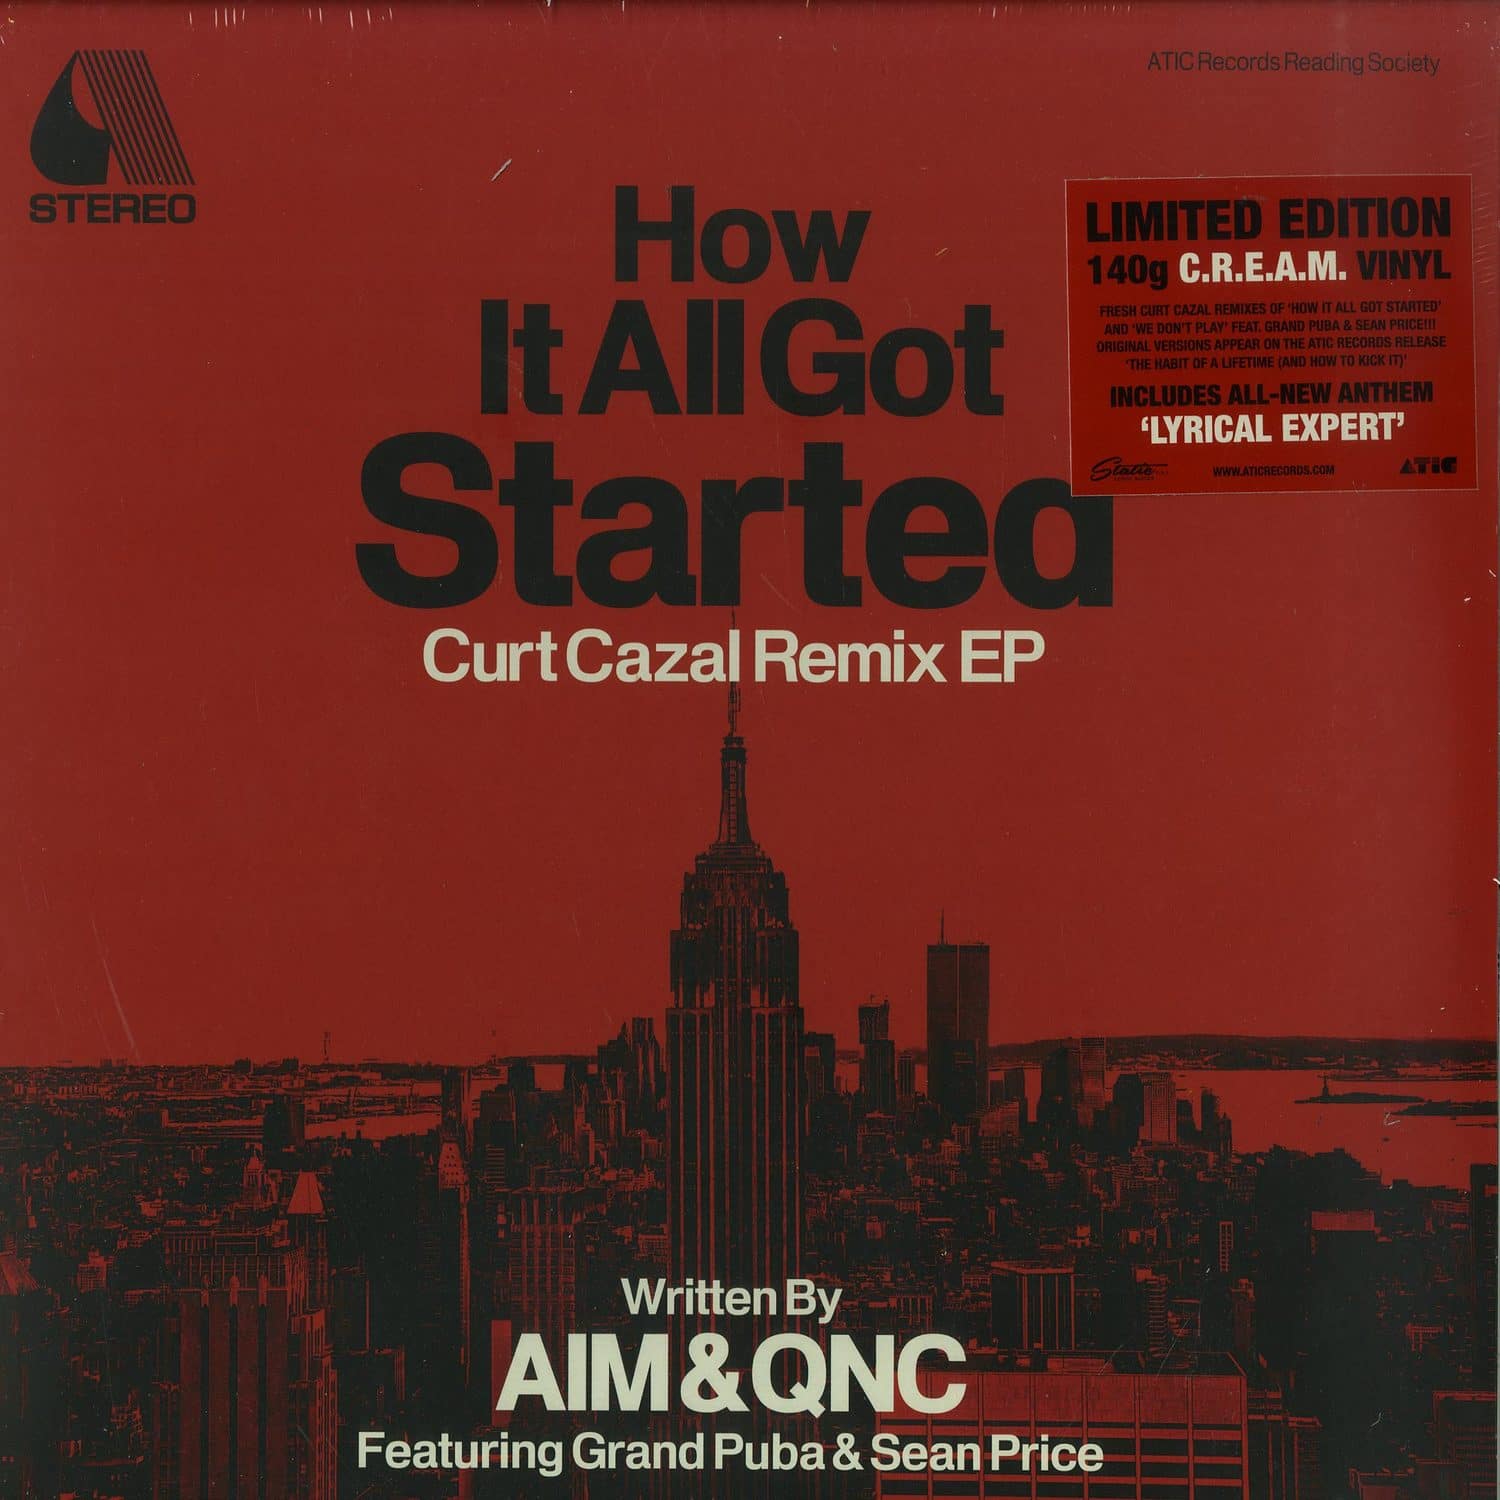 Aim & QNC - HOW IT ALL GOT STARTED - CURT CAZAL REMIX EP 